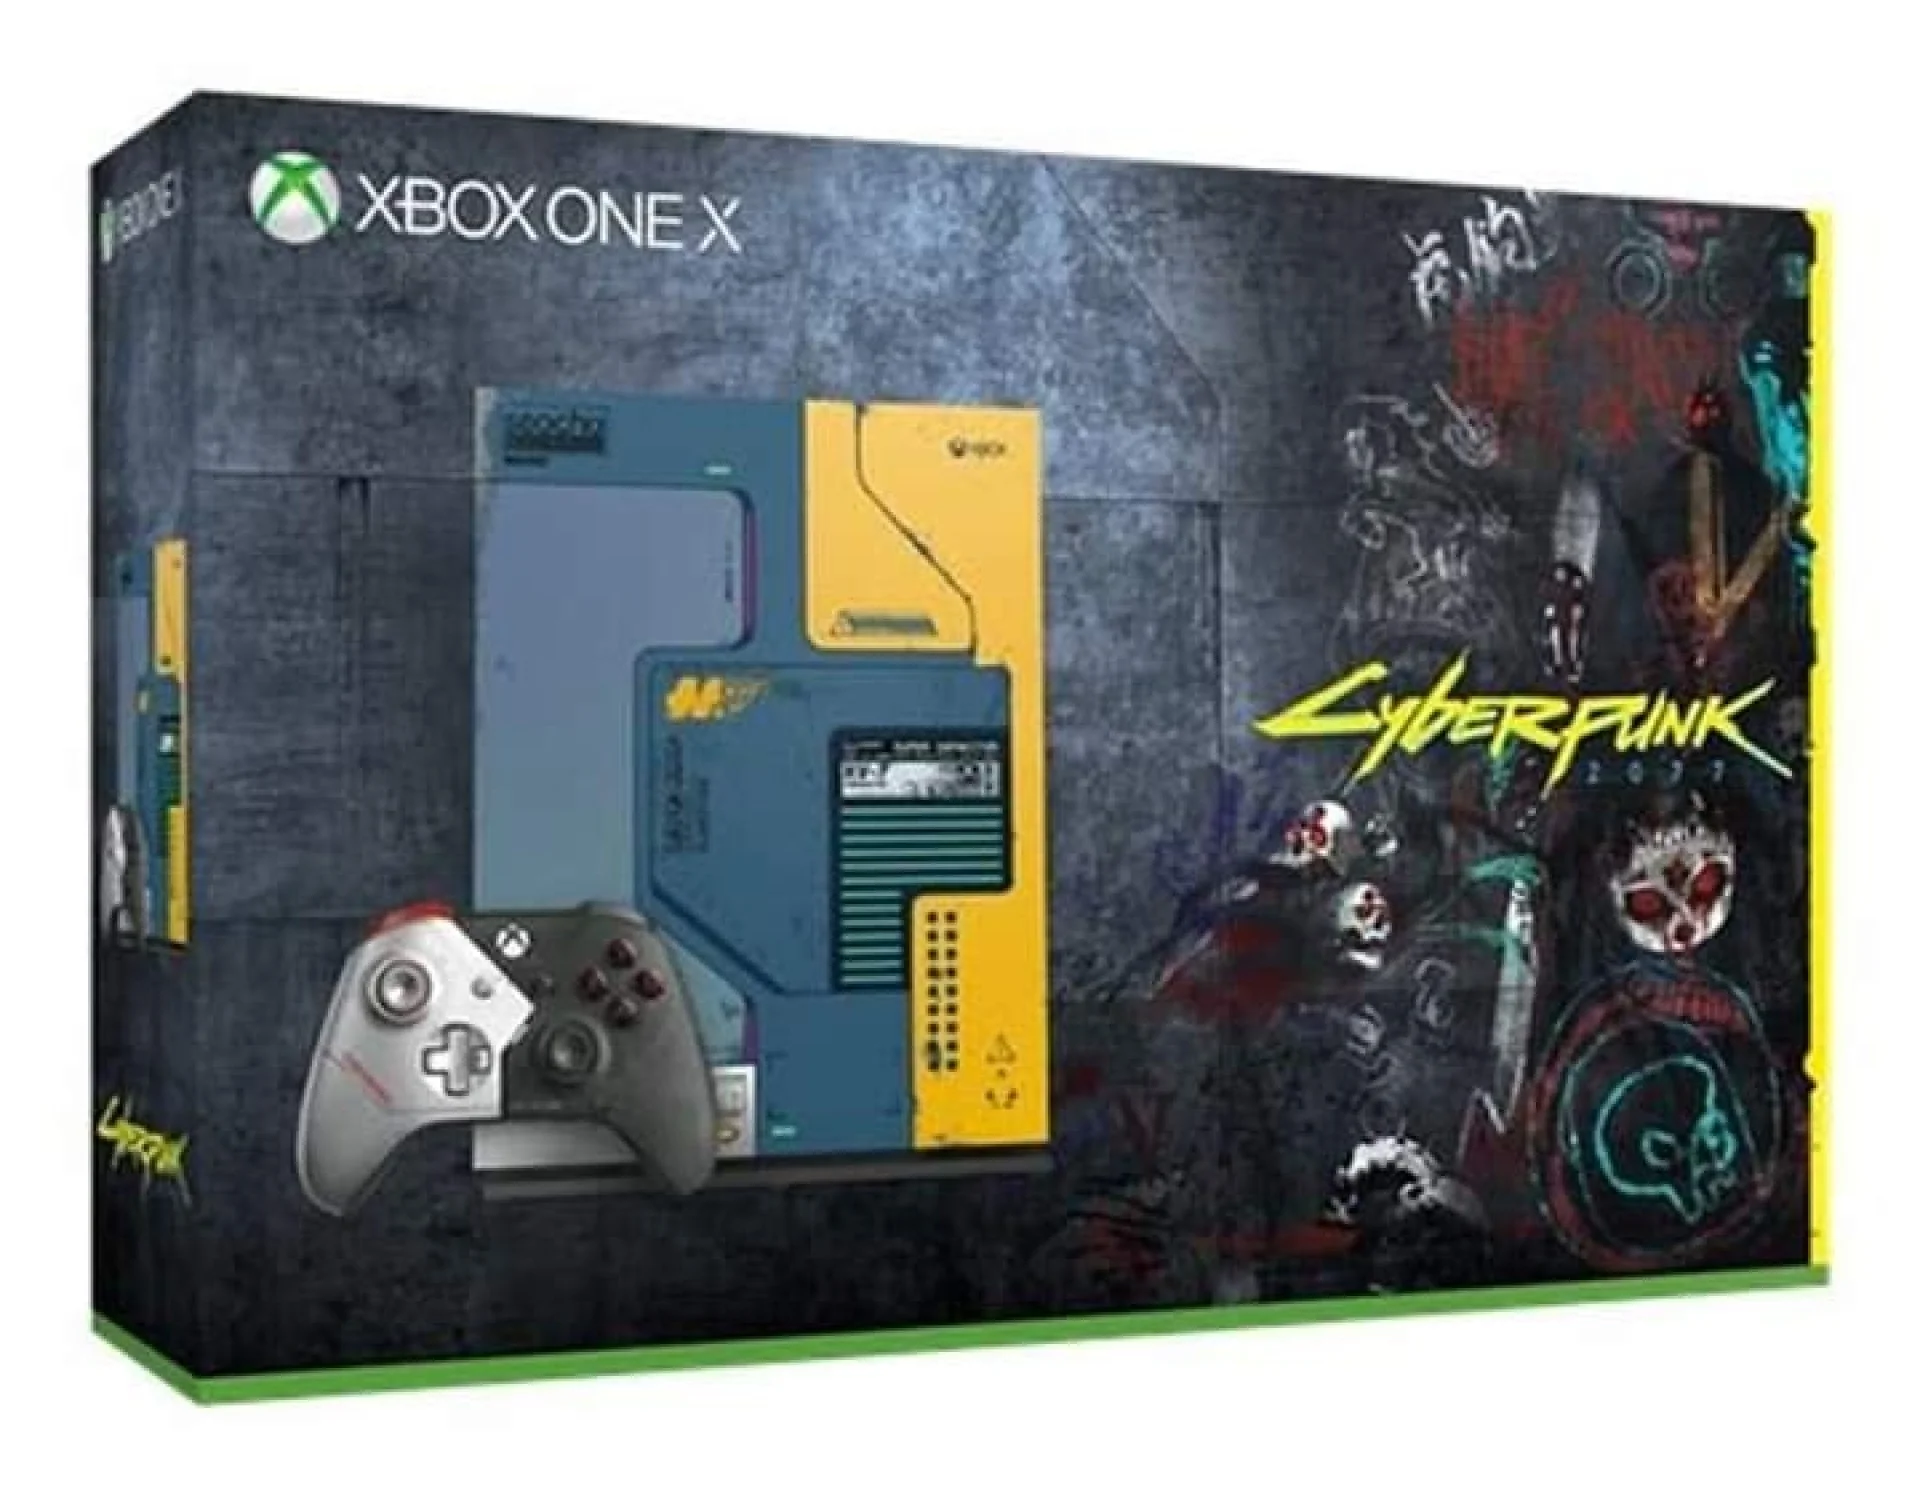 New Xbox One X Cyberpunk 2077 announced!